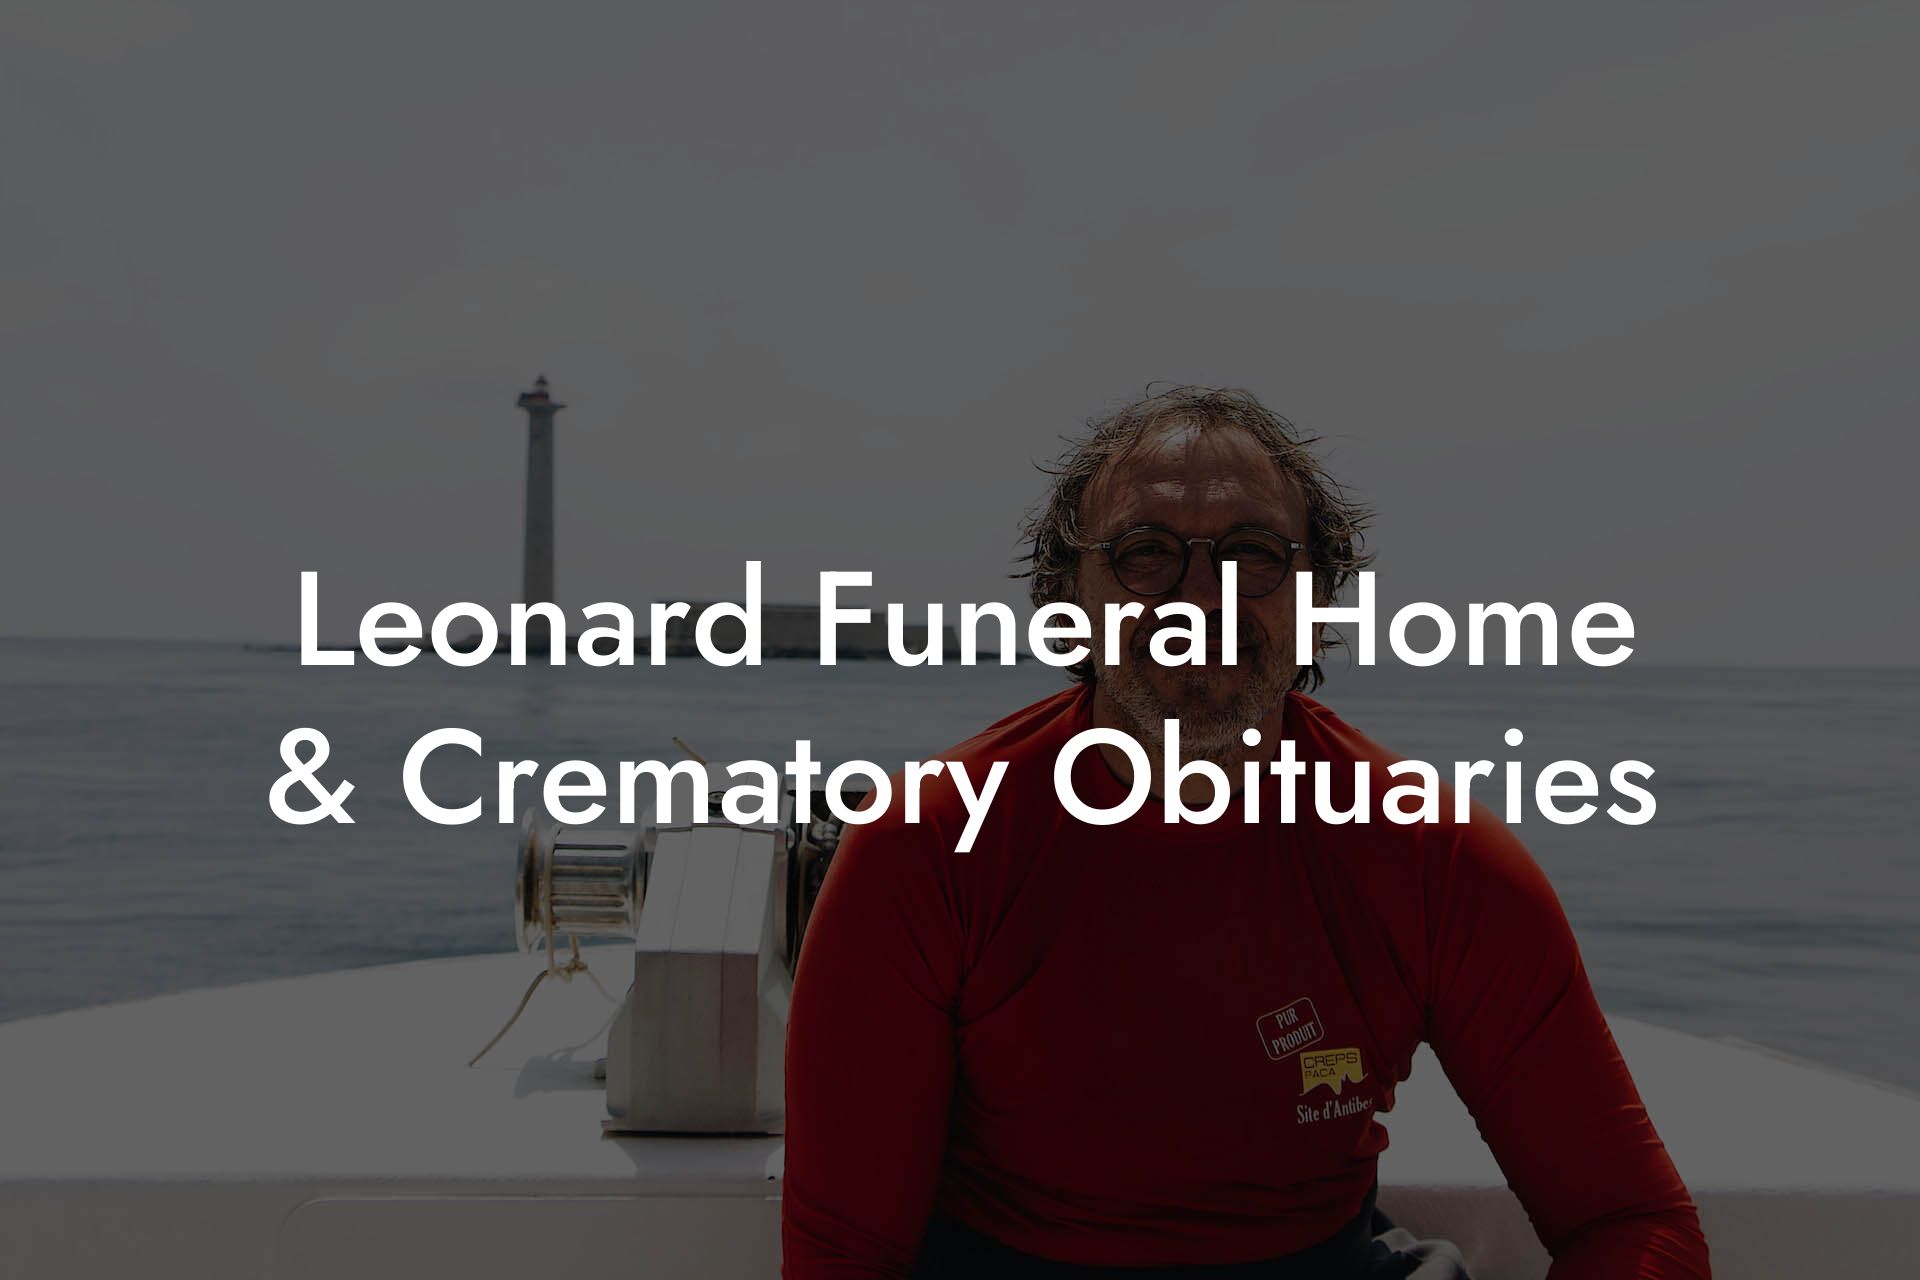 Leonard Funeral Home & Crematory Obituaries